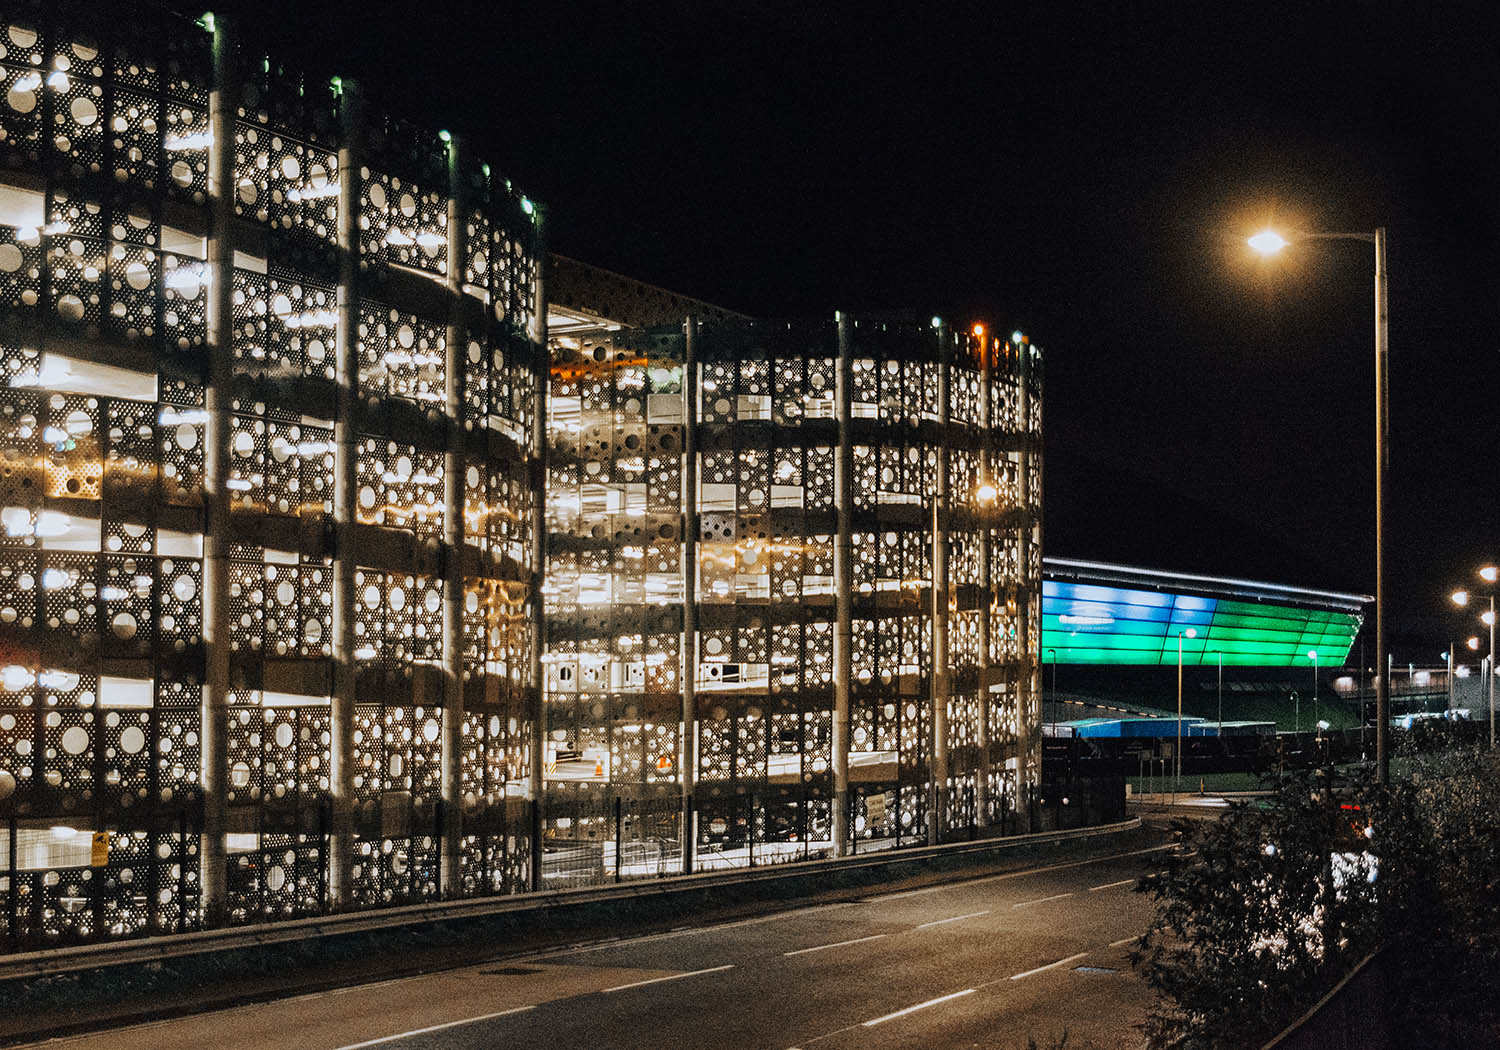 Hydro multi-storey car park by night, Glasgow, Scotland, UK